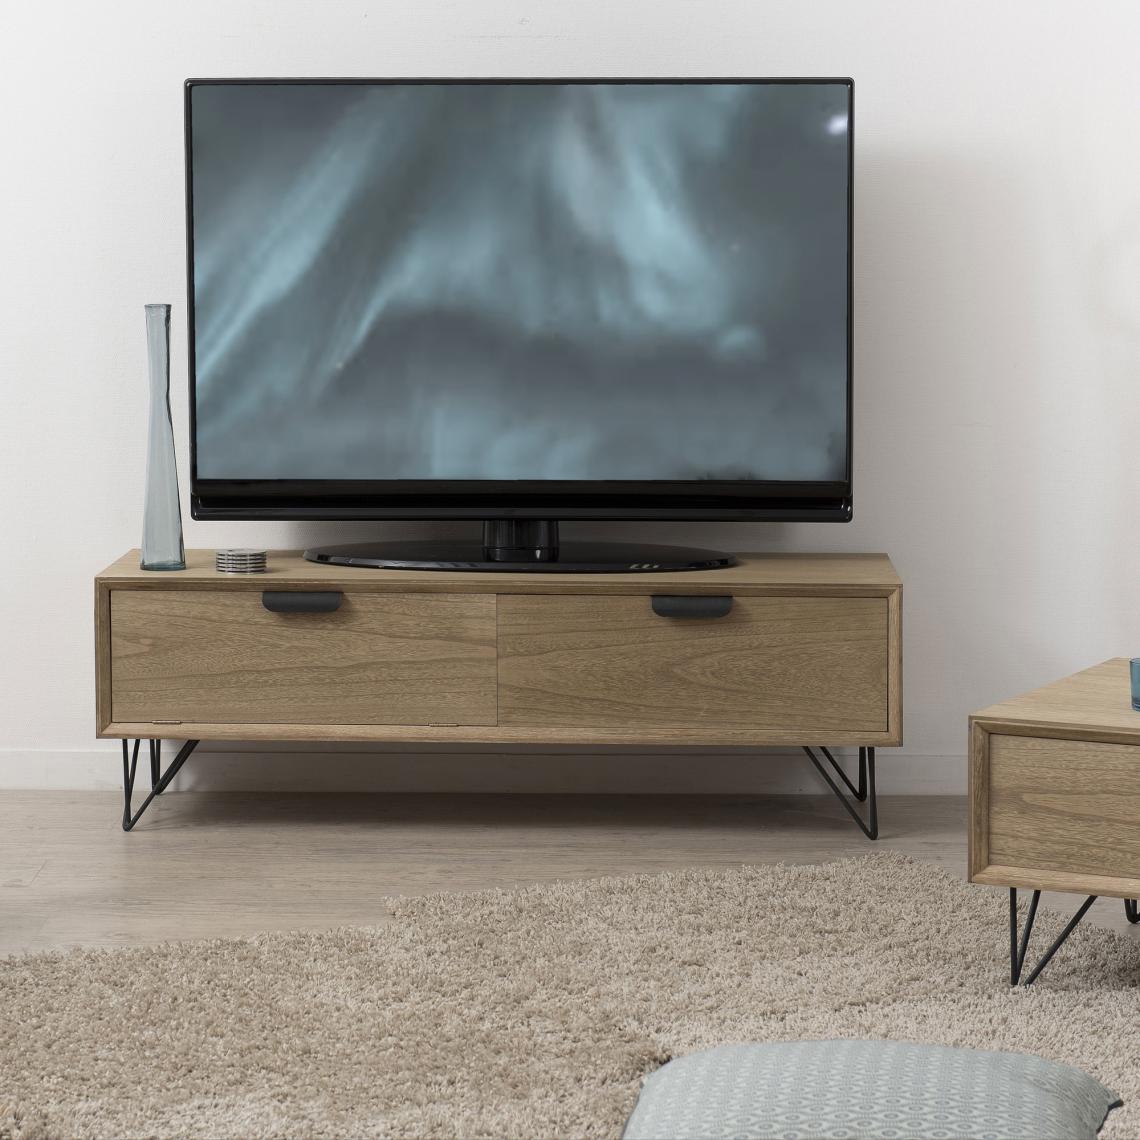 MACABANE - Meuble TV rectangulaire 1 porte 1 tiroir pieds épingle en métal - Marron - Meubles TV, Hi-Fi